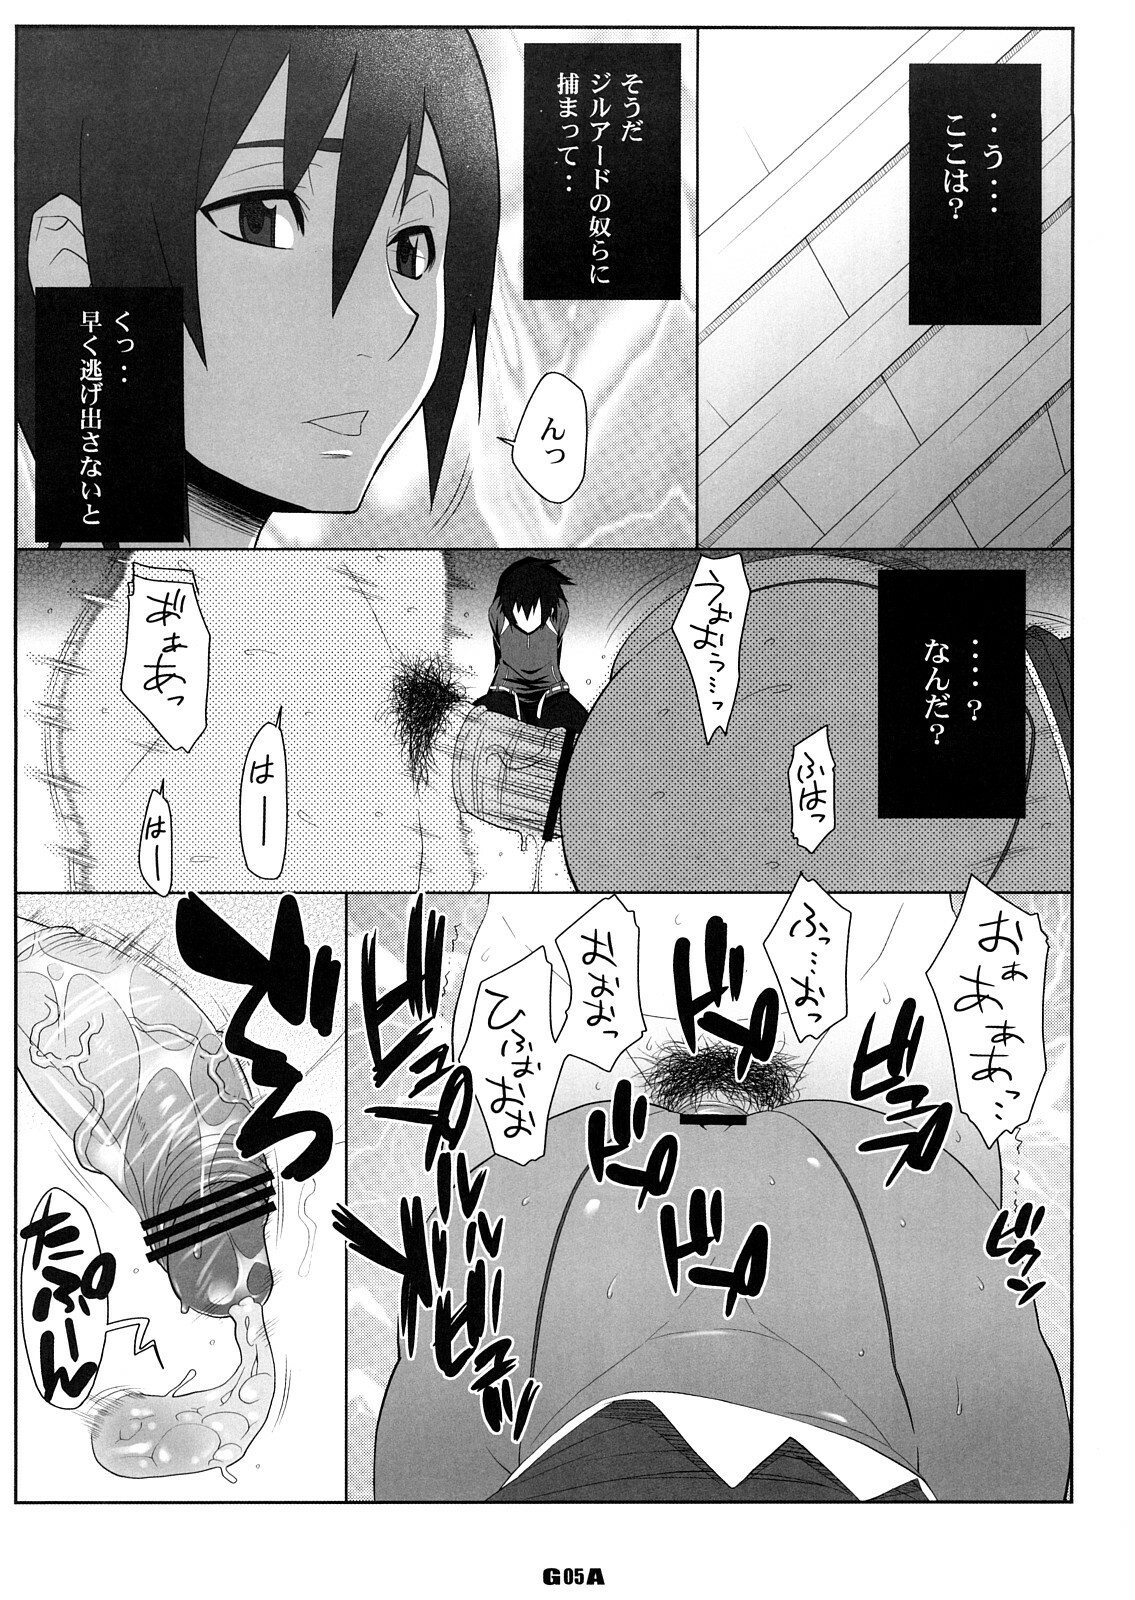 [TETRODOTOXIN (Nise Kurosaki, ST-retcher)] GA (Dragonaut) page 4 full